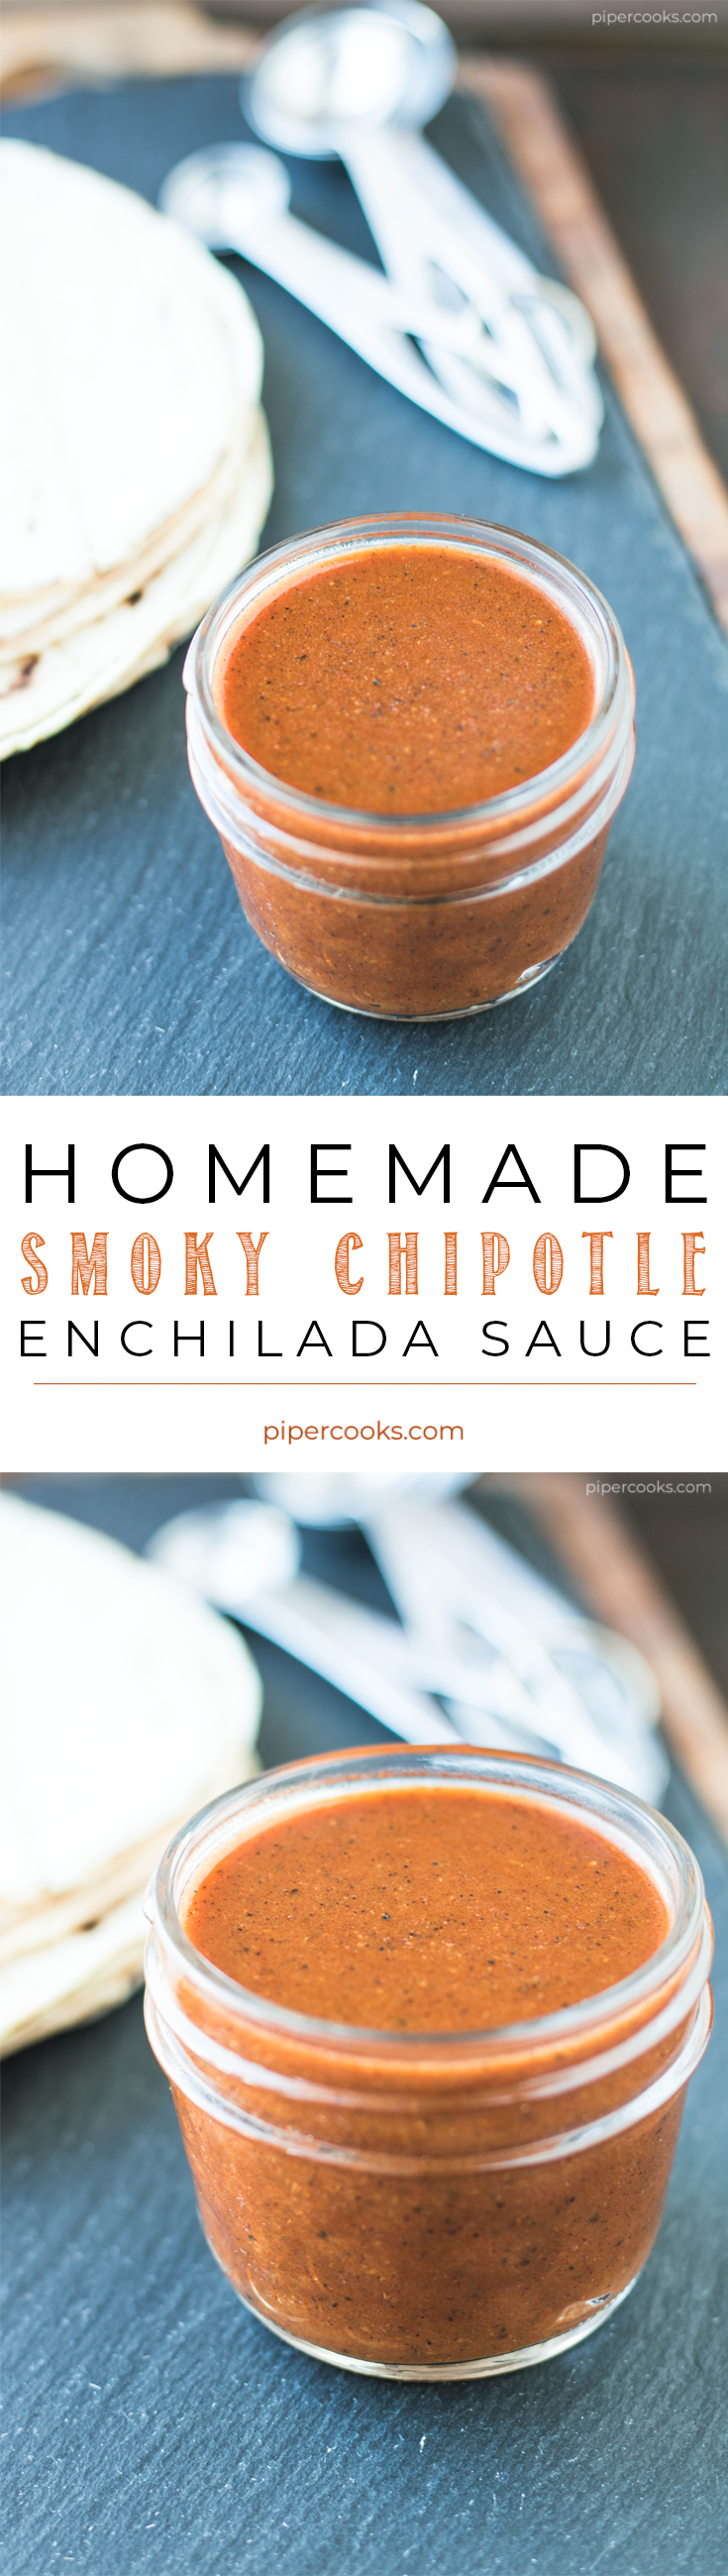 Homemade Enchilada Sauce | Pipercooks